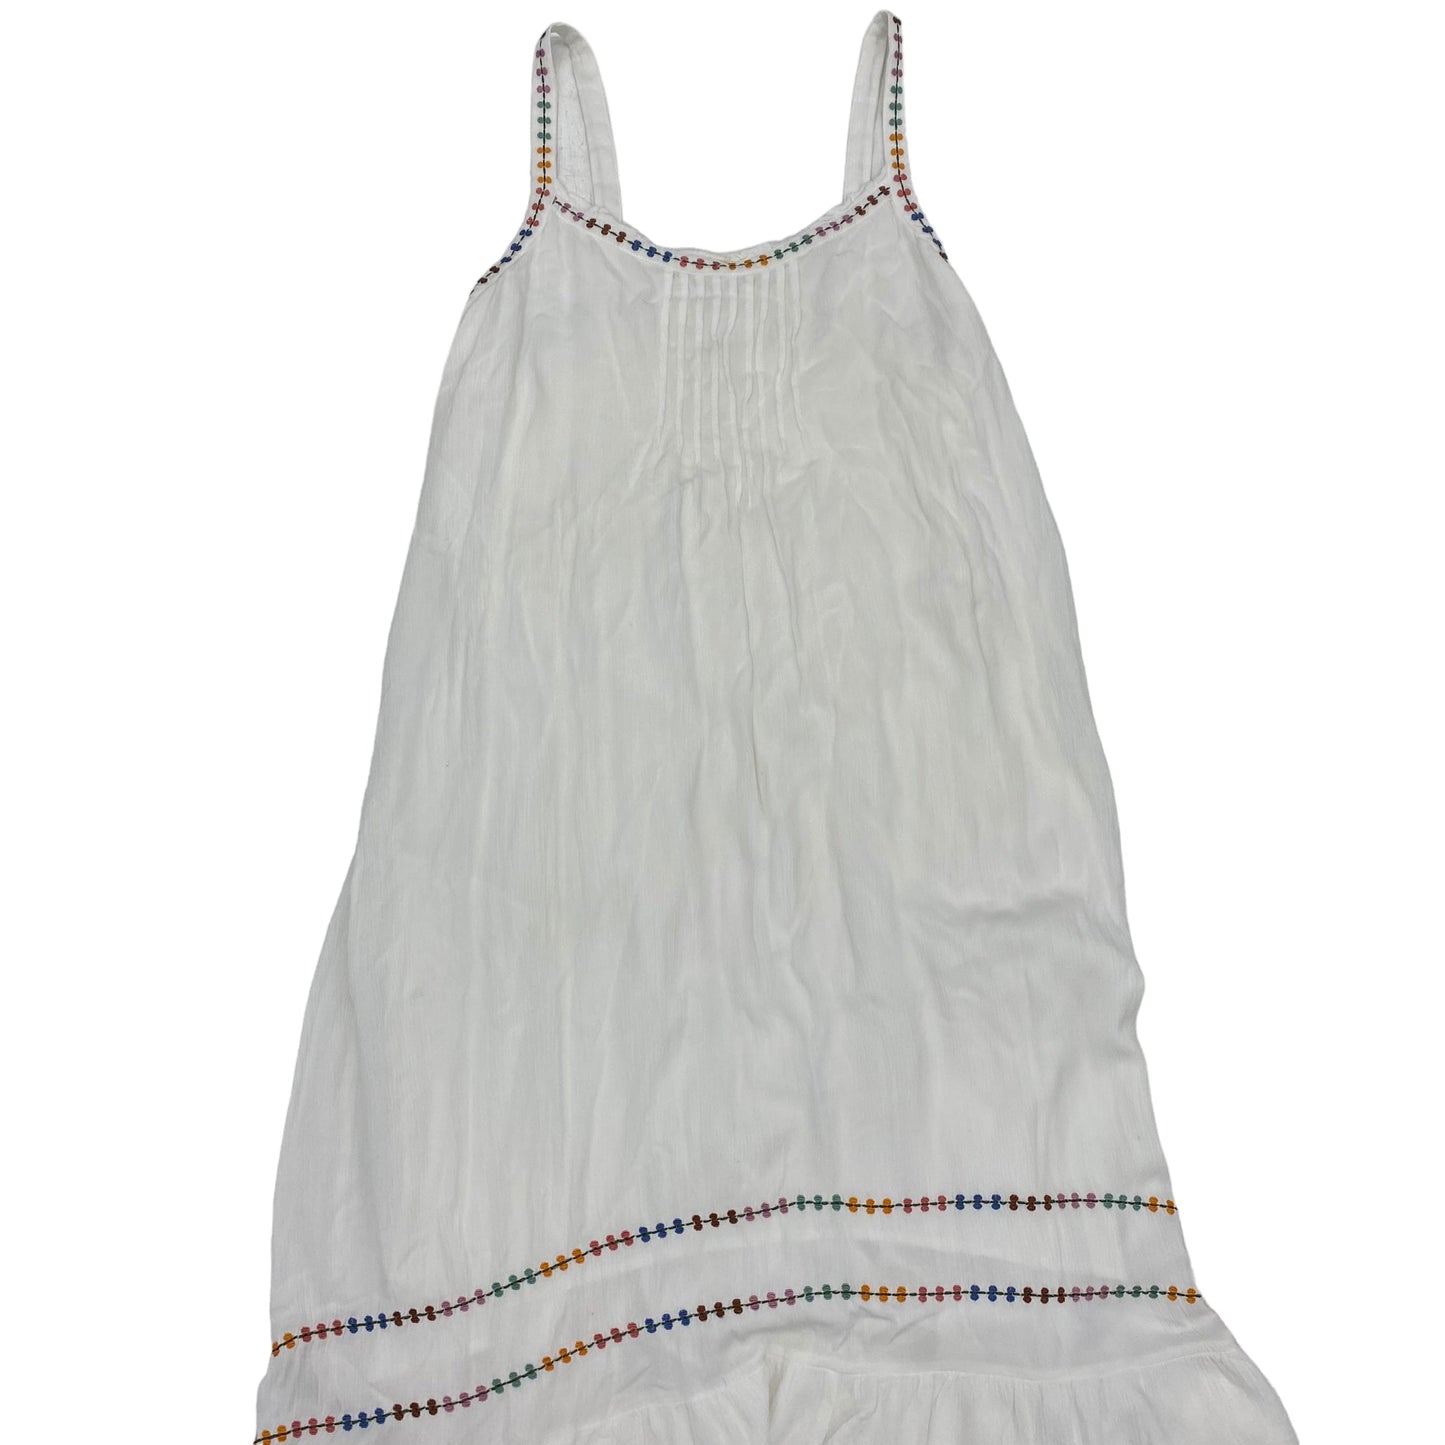 WHITE MATILDA JANE DRESS CASUAL MAXI, Size XL